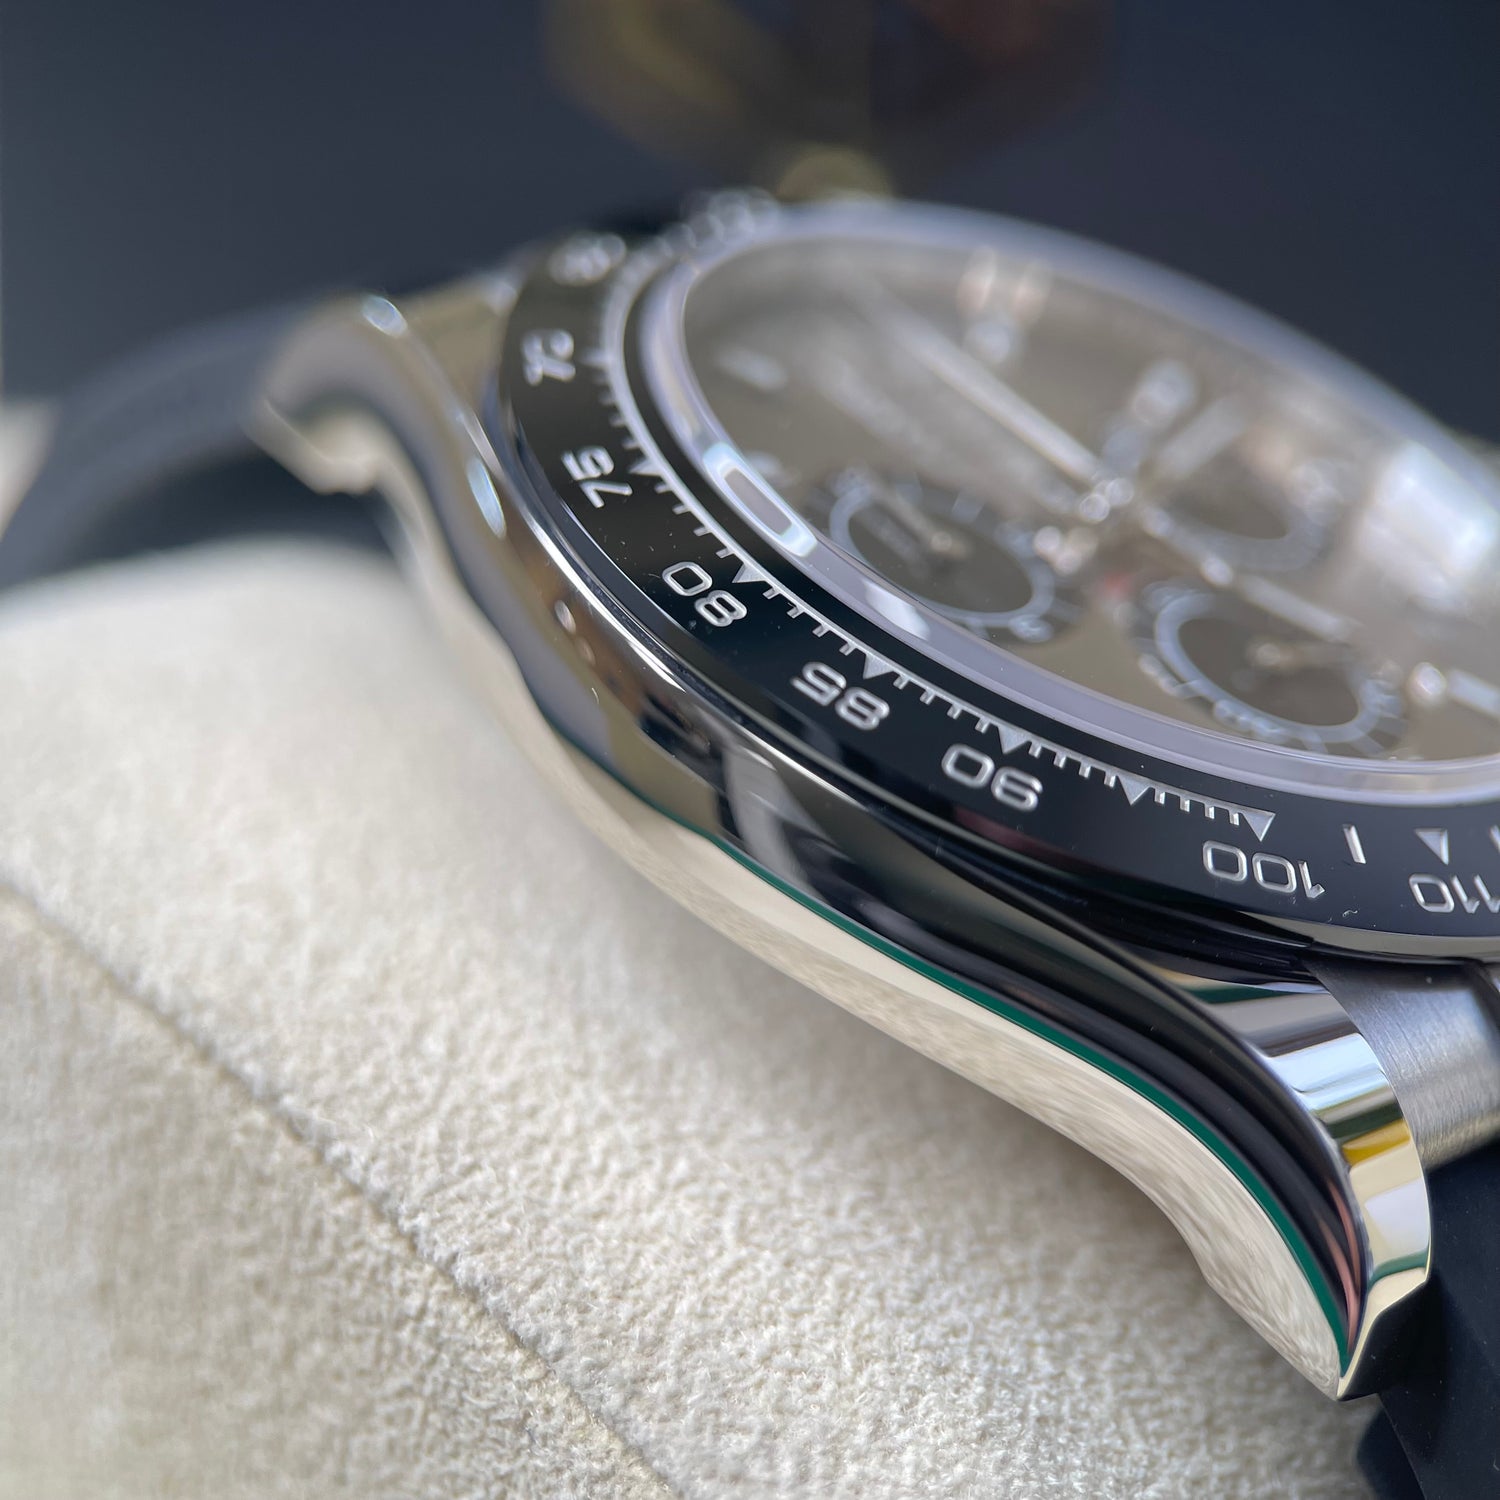 Rolex Cosmograph Daytona 18ct White Gold 116519LN Sept 2020 Mint Condition Watch